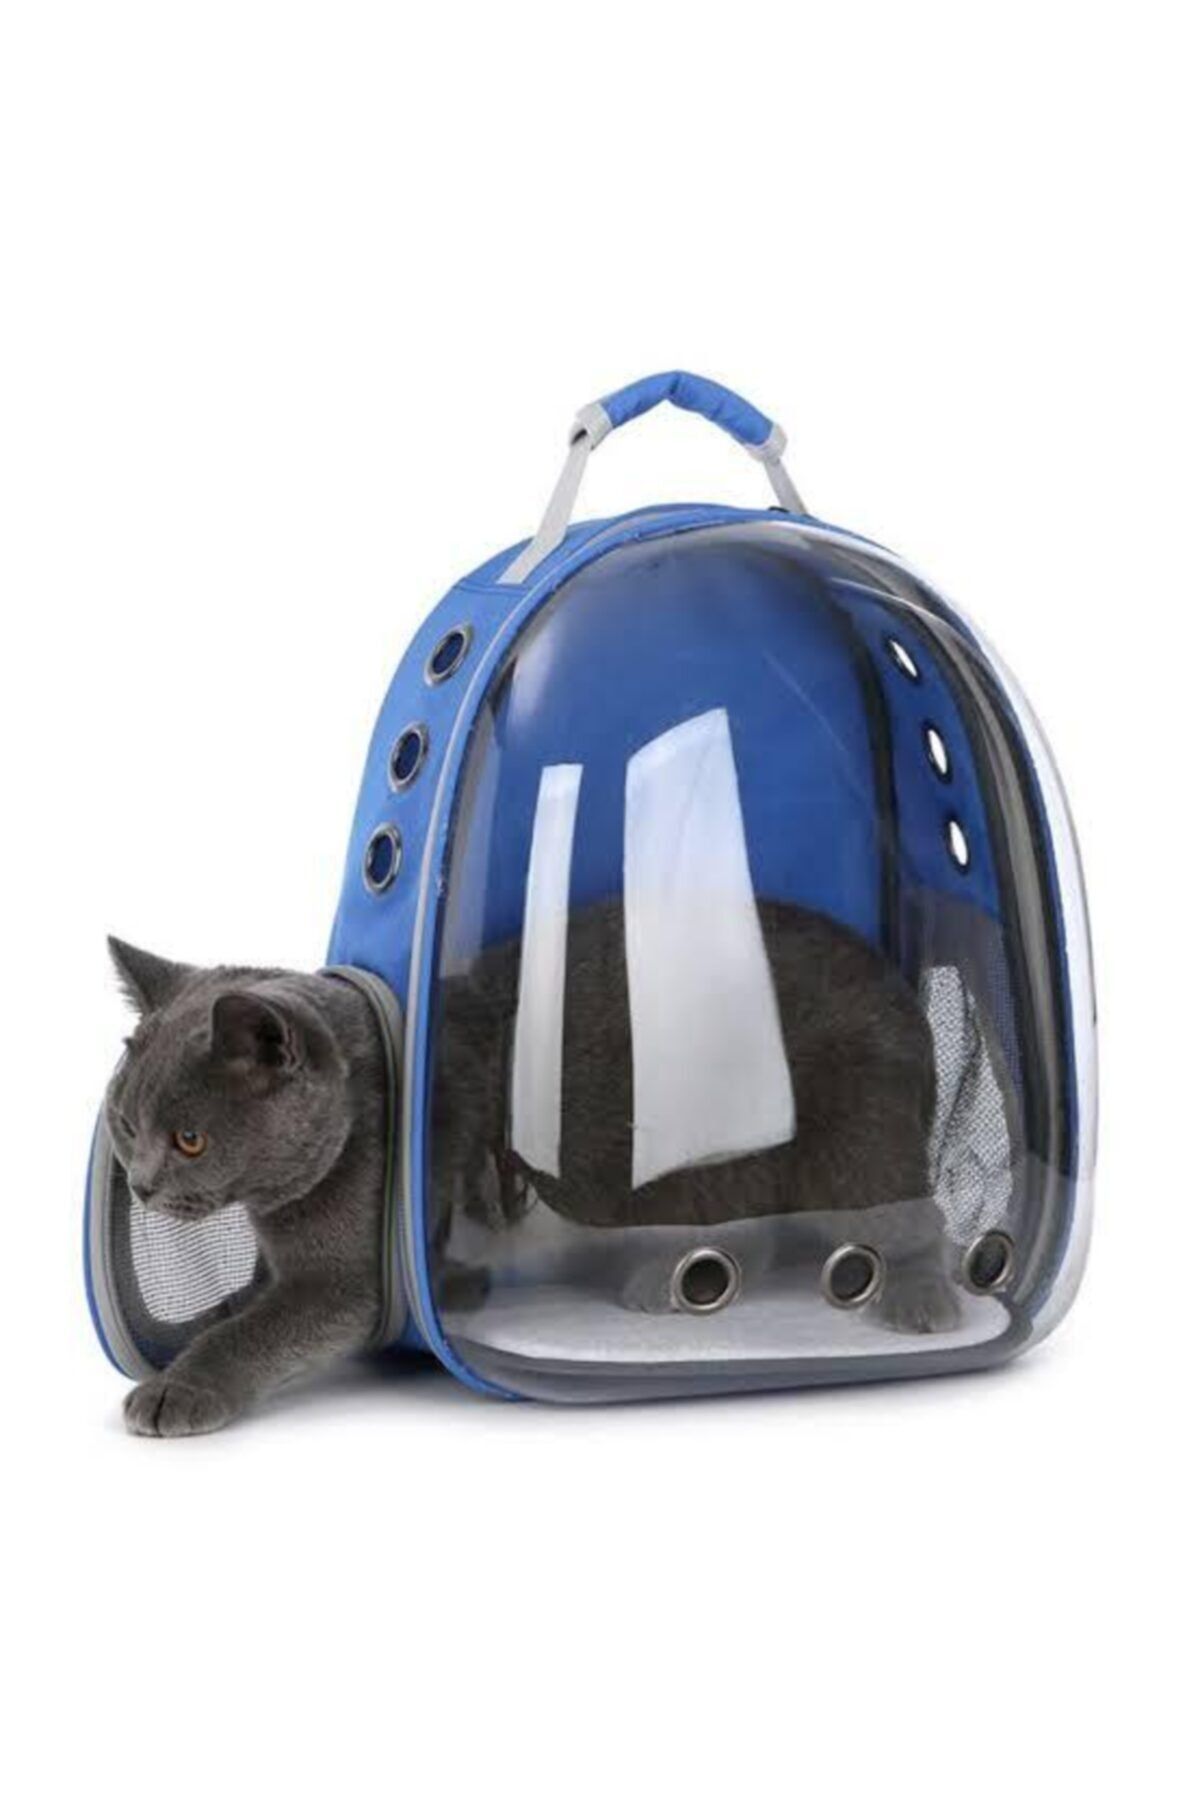 Mia Şeffaf Astronot Kedi Köpek Taşıma Çantası 42x22x33 Cm Mavi